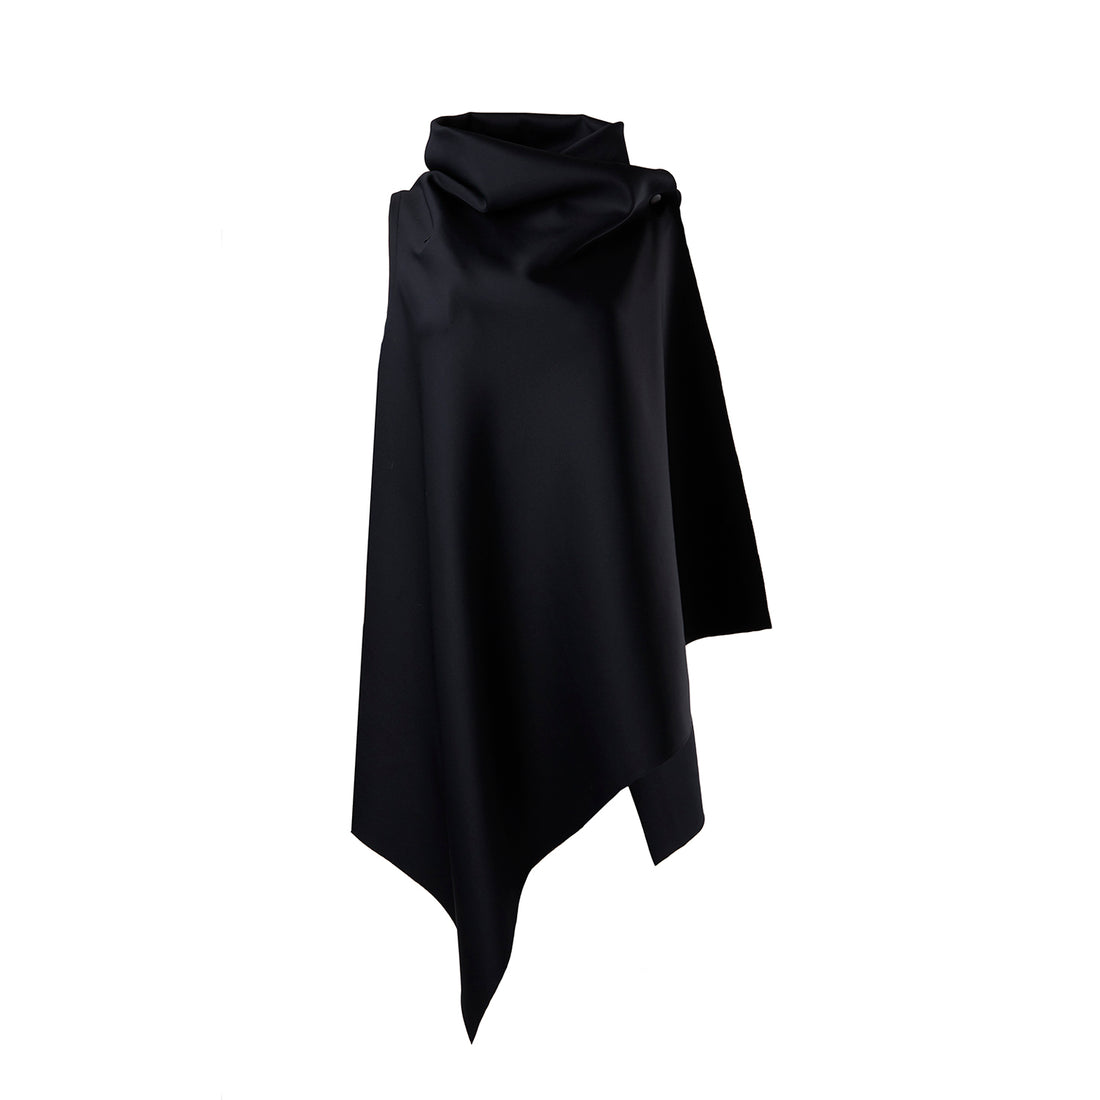 An asymmetrical black vest for women